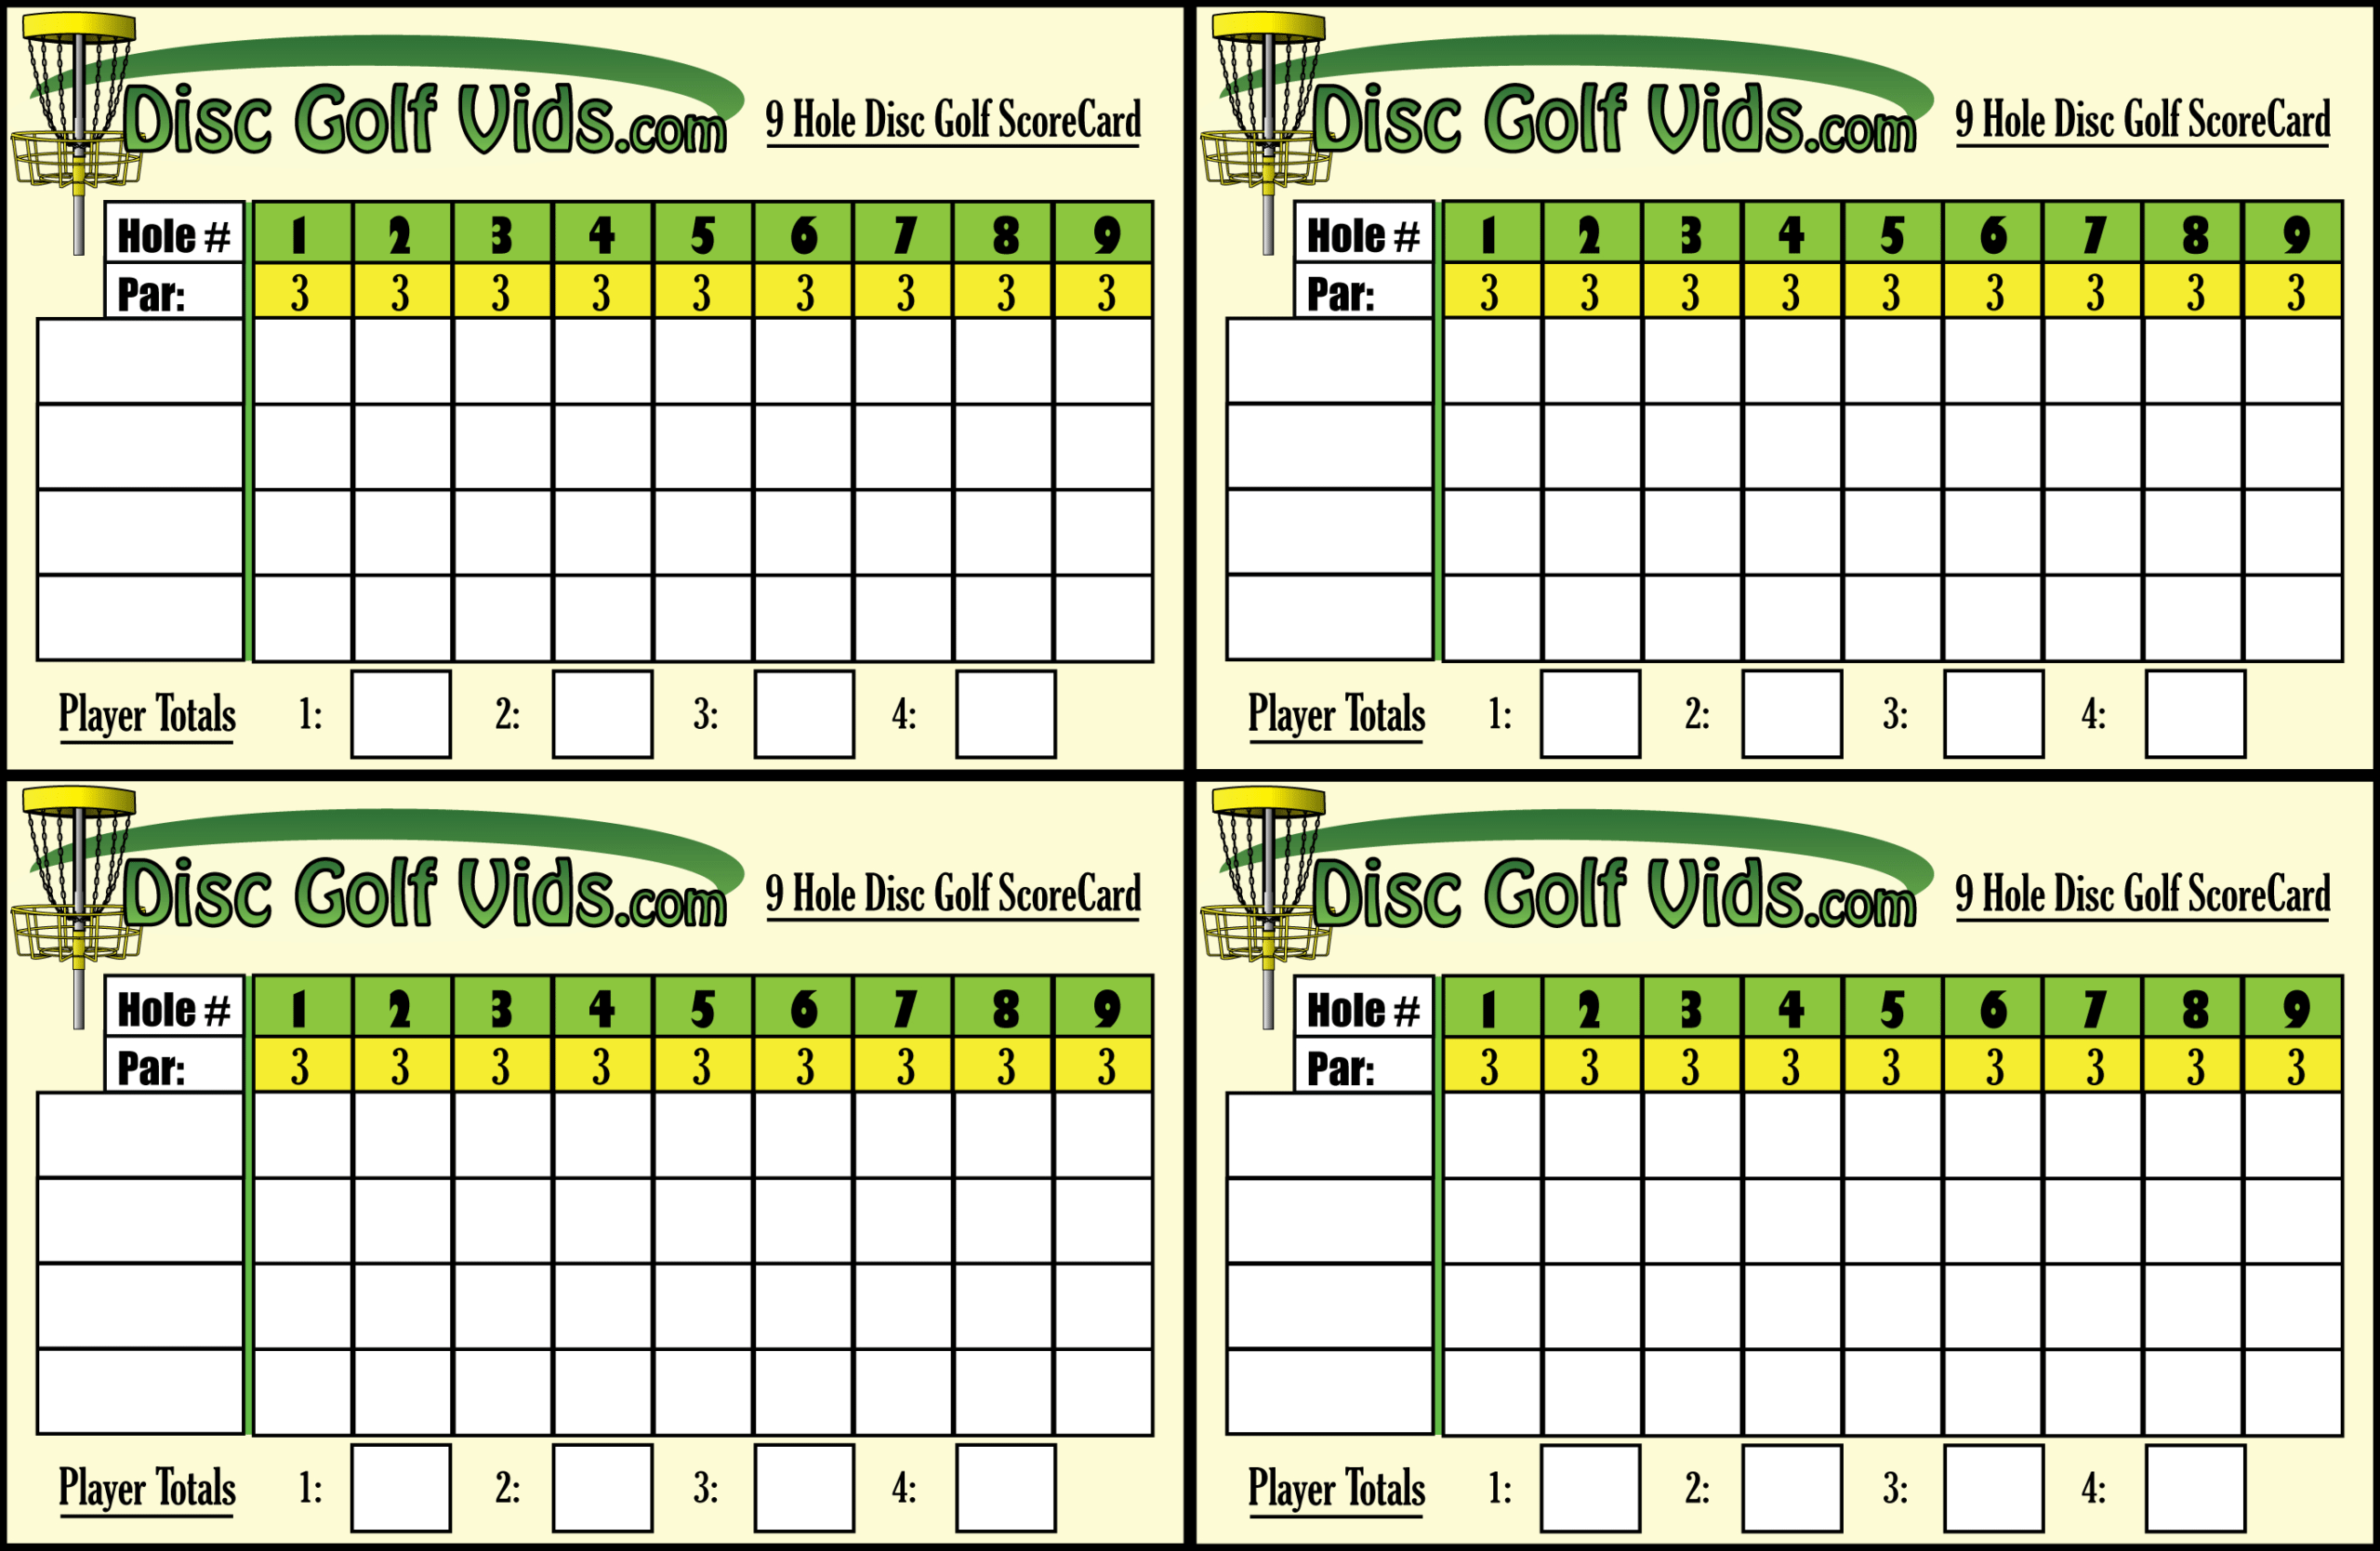 Discgolfvids Disc Golf Scorecards! For Golf Score Cards Template Best